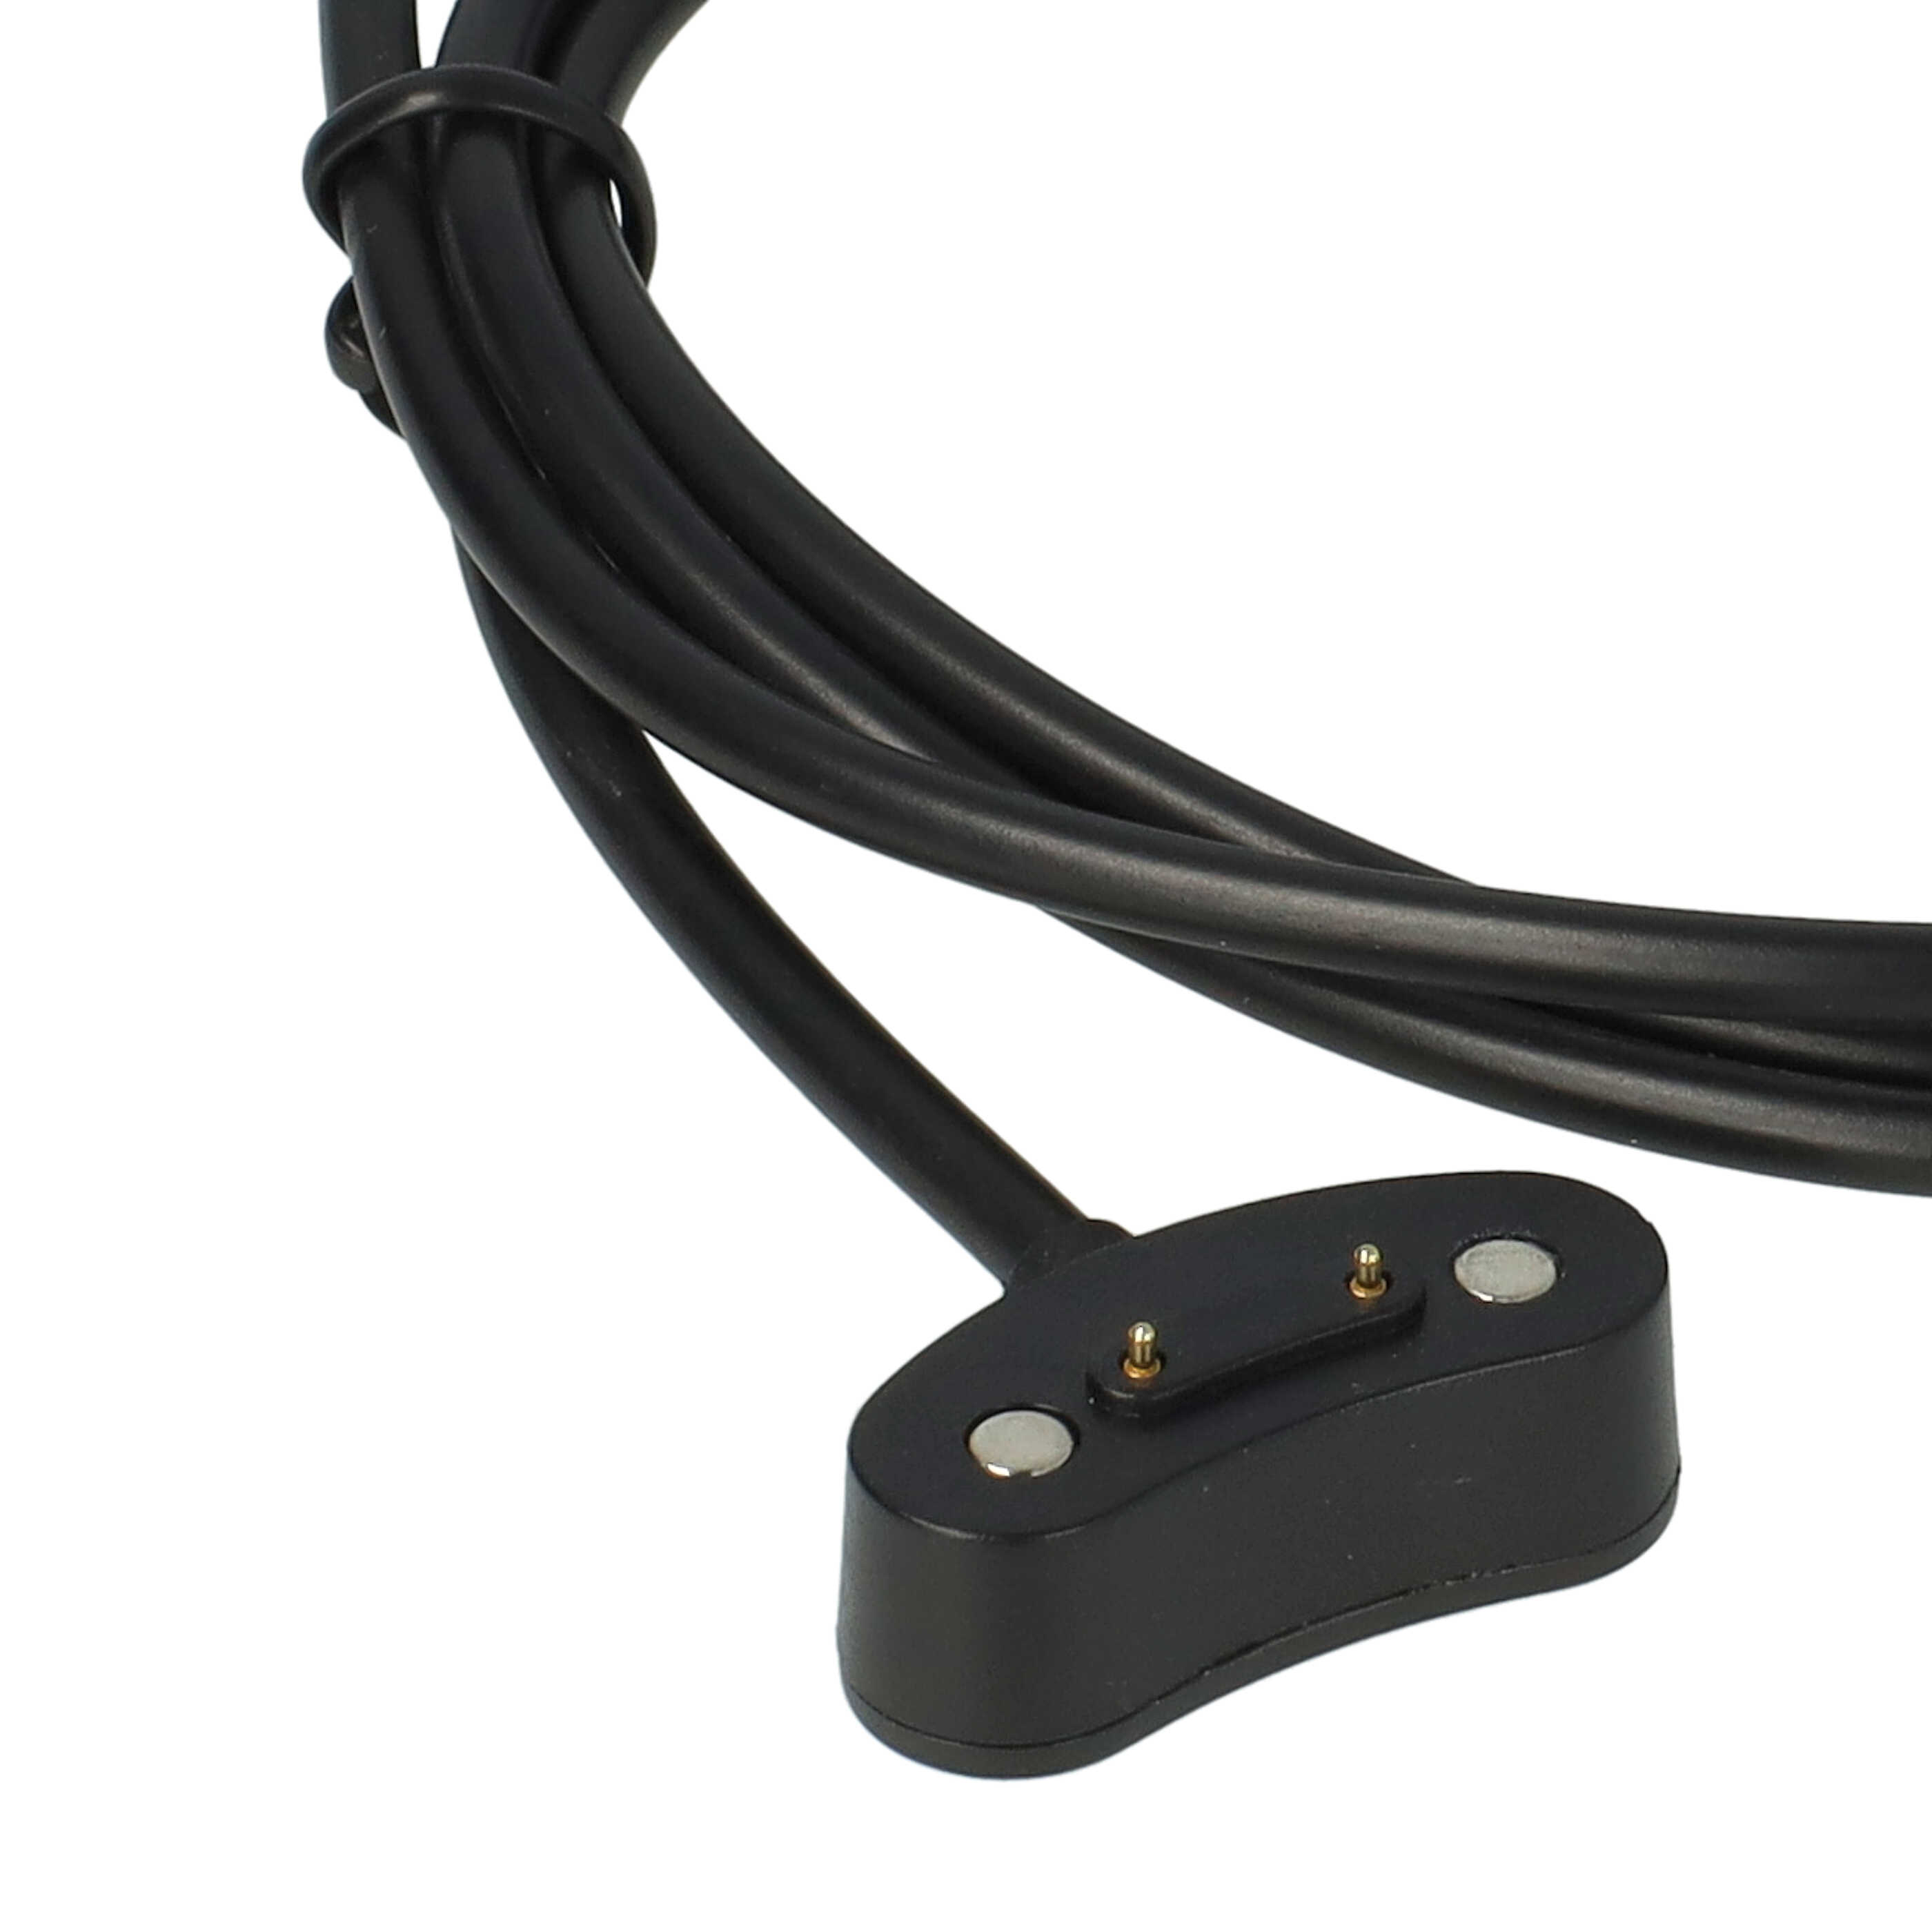 Cable de carga USB para smartwatch Mobvoi TicWatch E3 - negro 100 cm